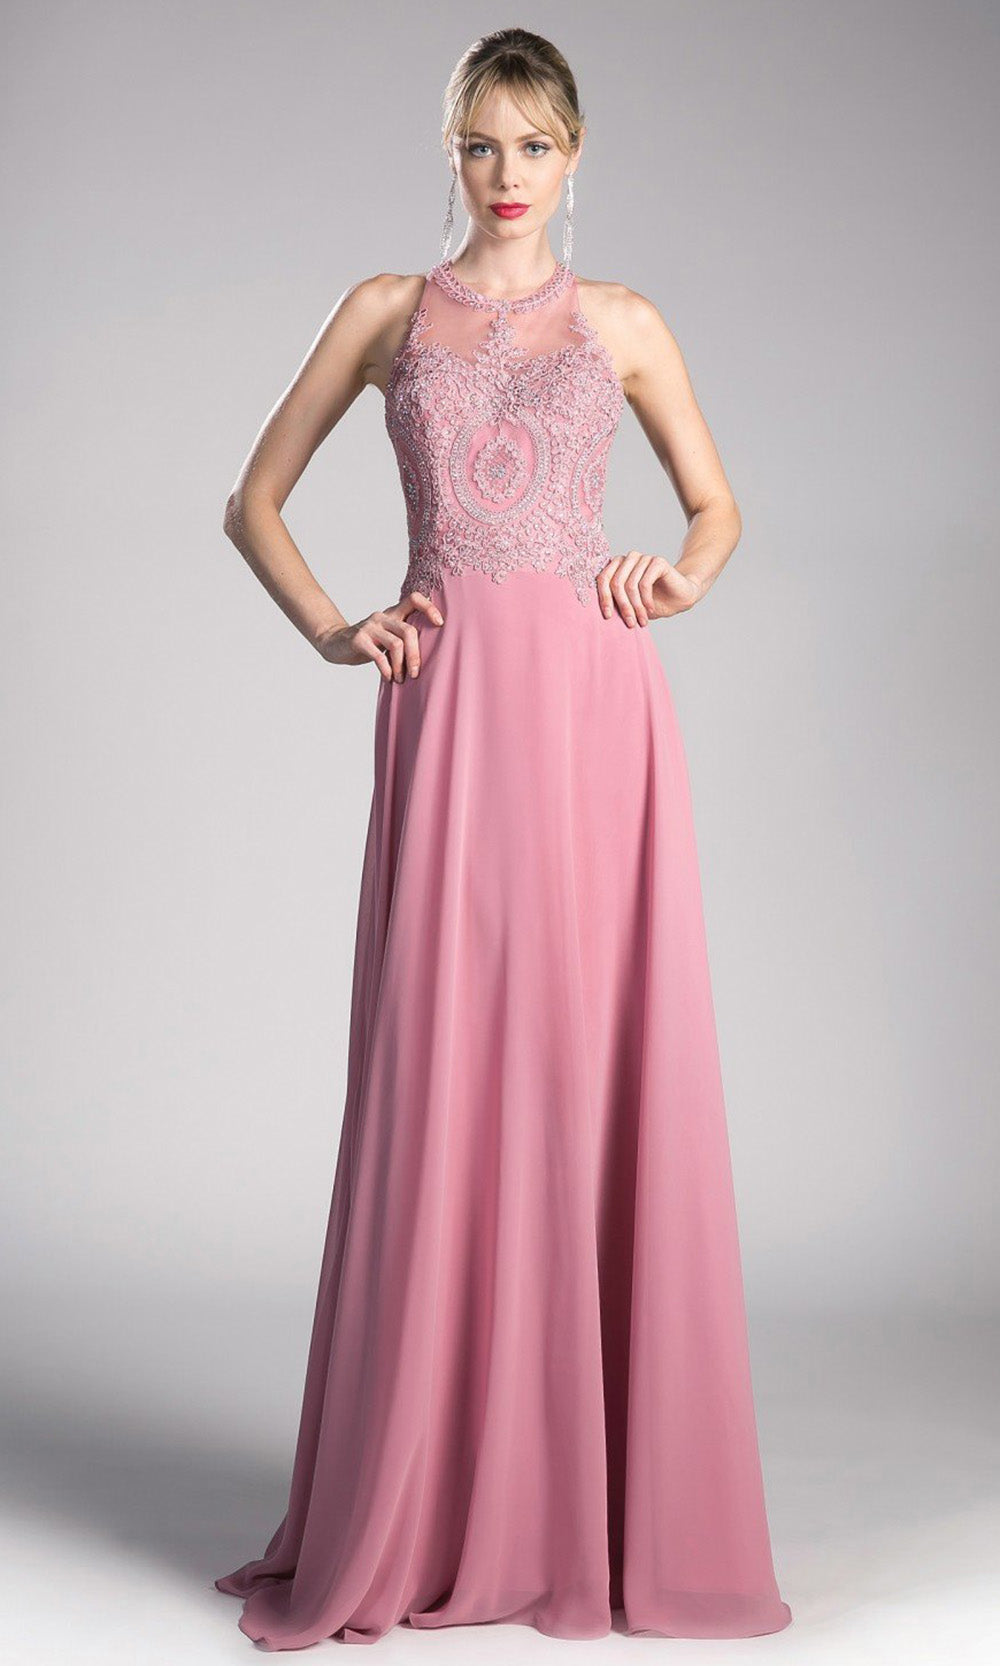 Cinderella Divine - UJ0120 Illusion Applique A-Line Gown In Pink